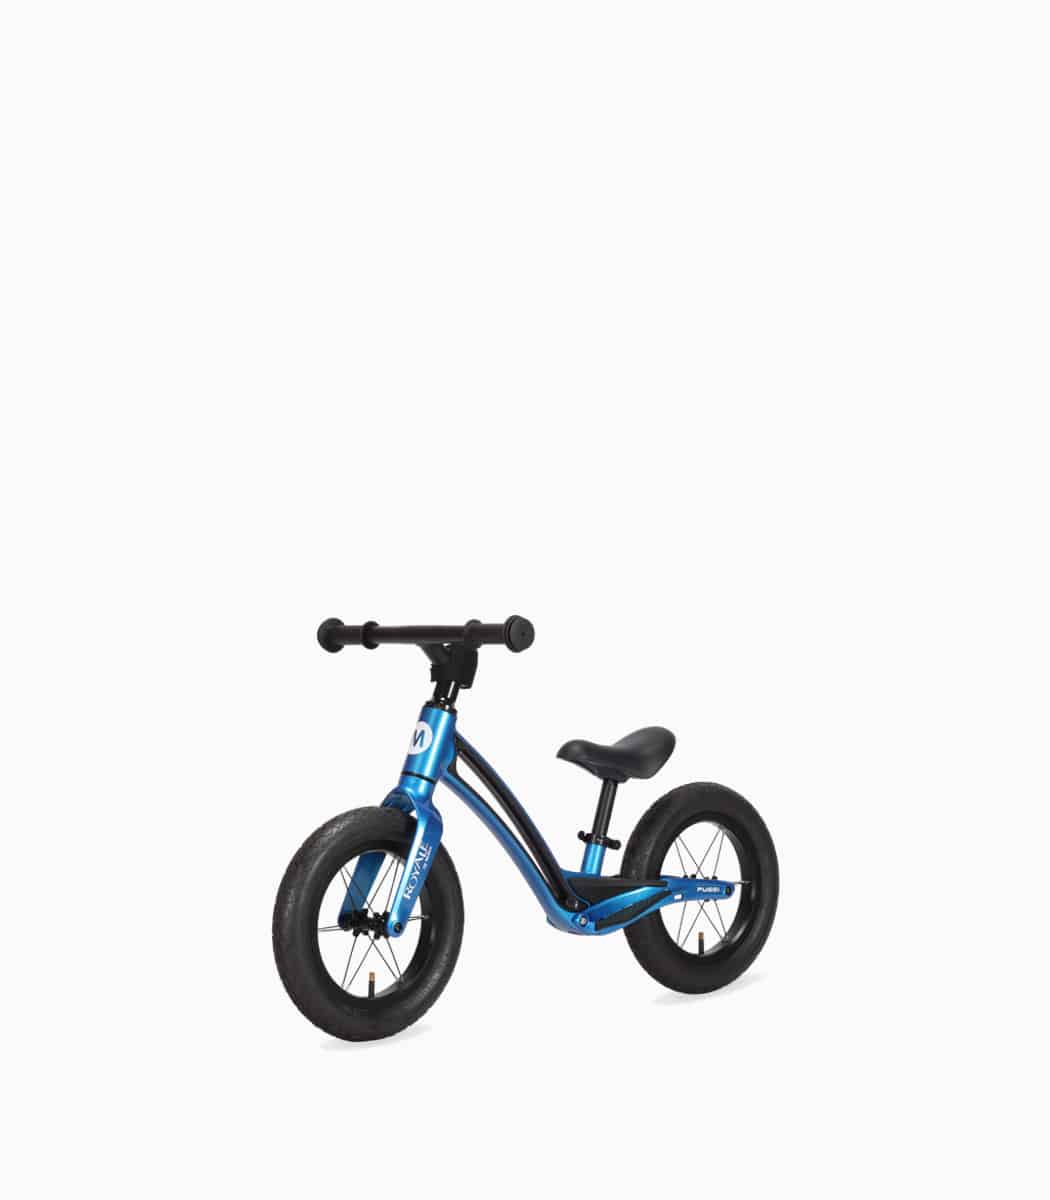 ROYALE Puggi (BLUE) kids balance bike angled left